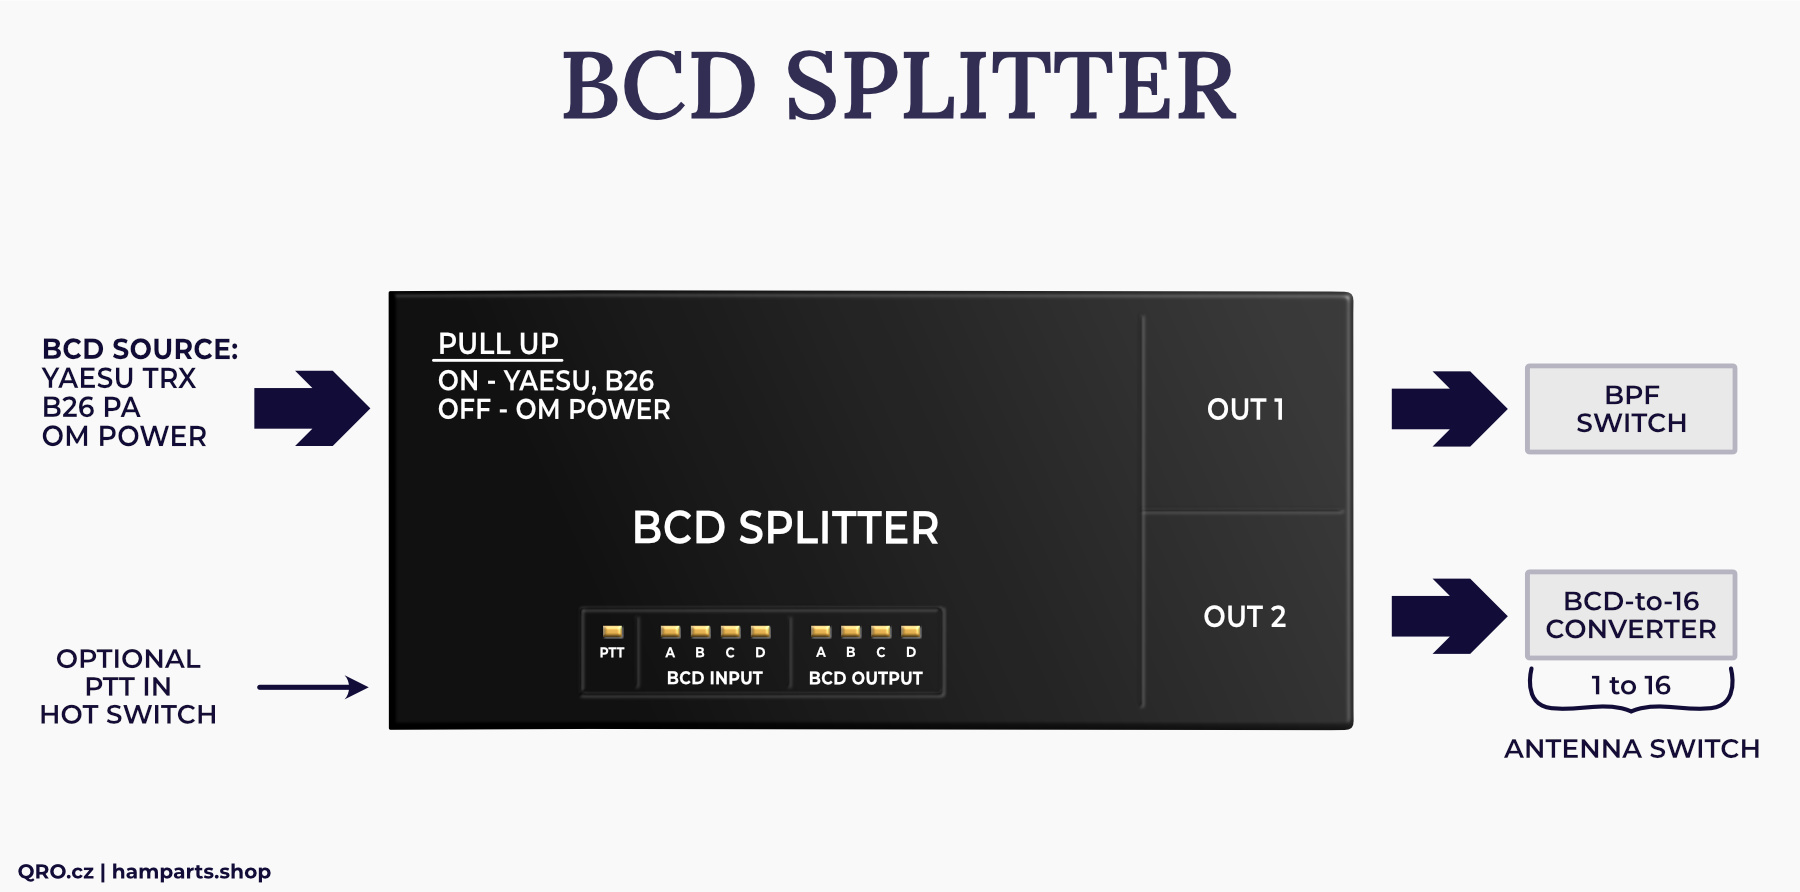 BCD splitter version by qro.cz hamparts.shop